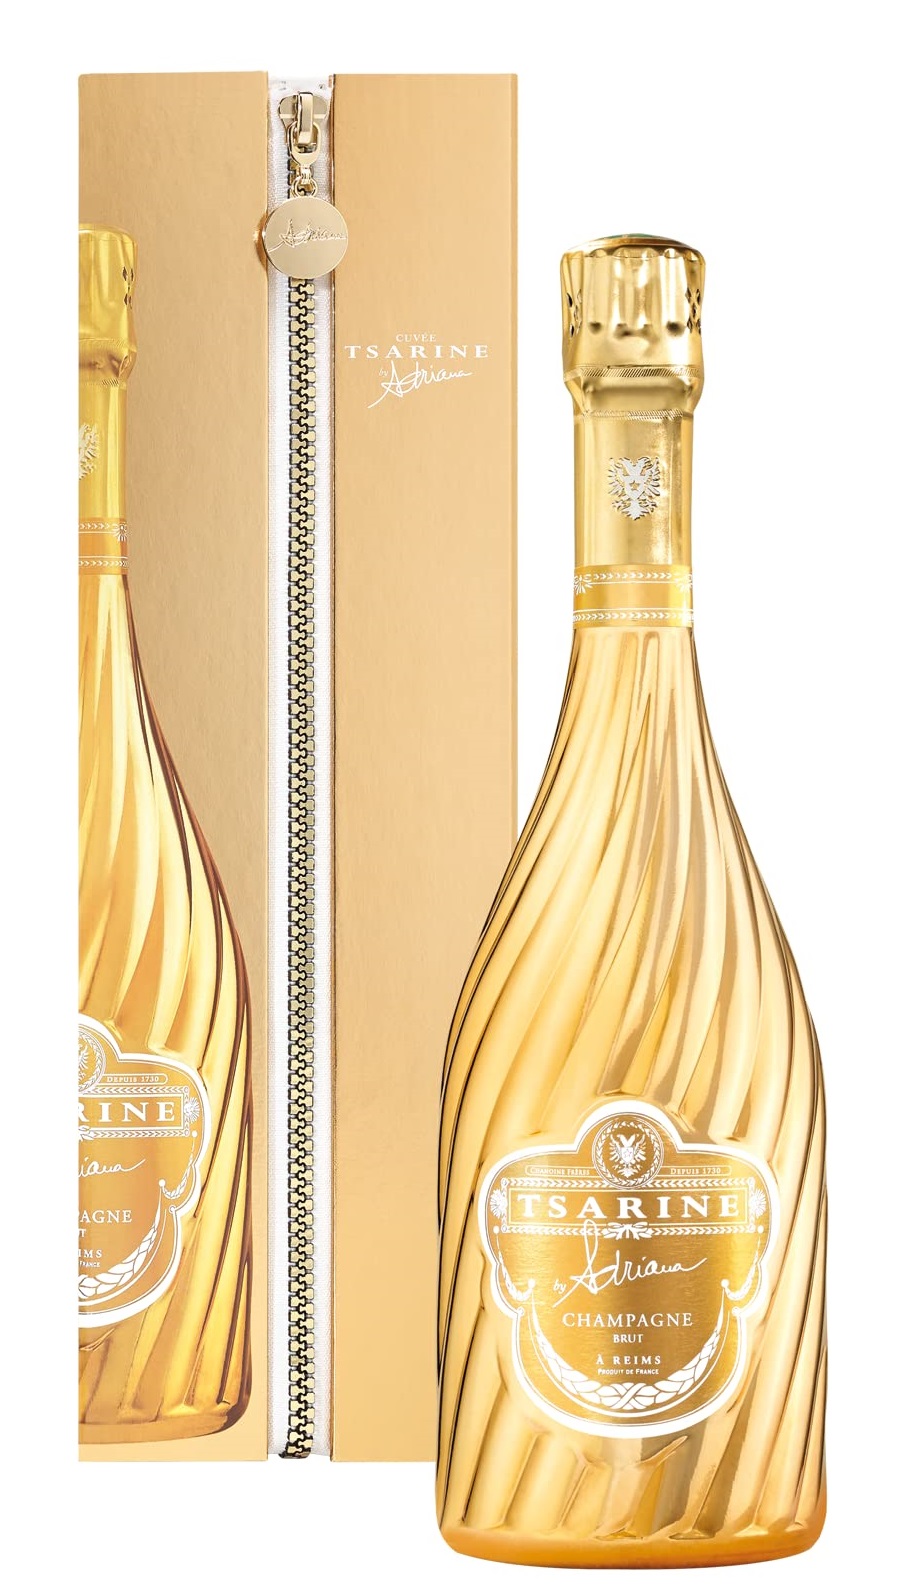 Tsarine Champagne Brut by Adriana, 0,75l